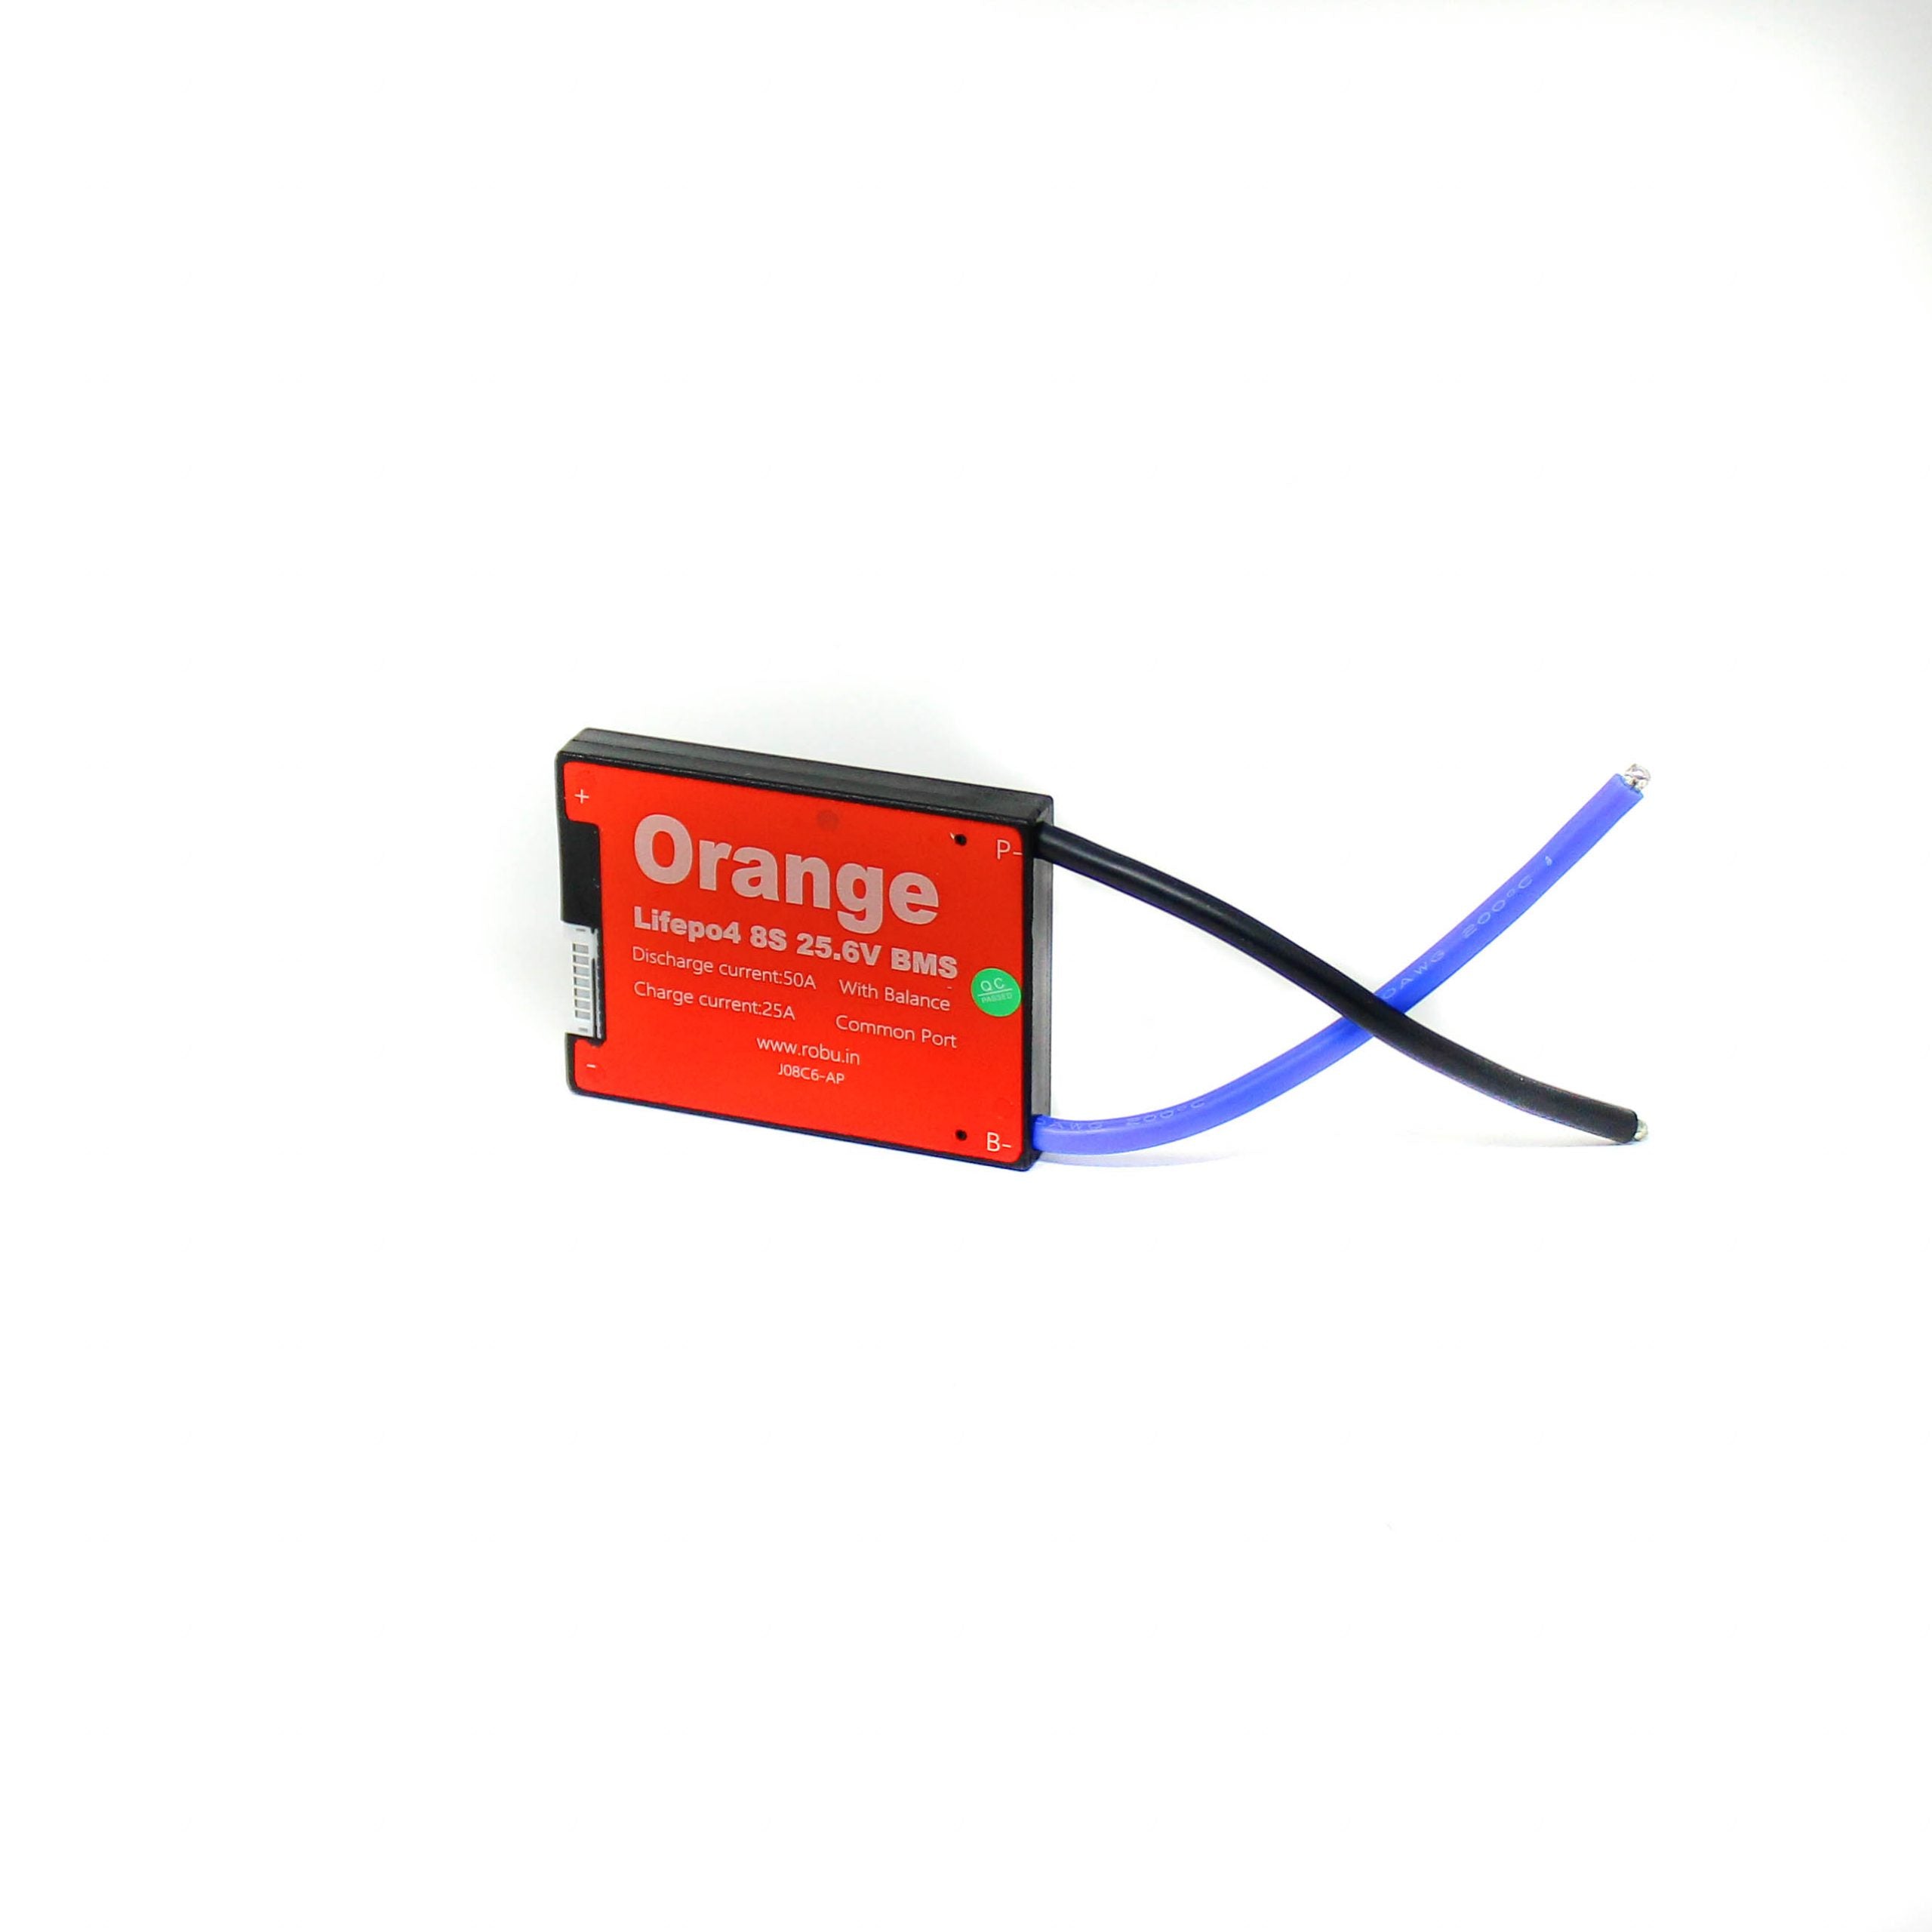 Orange Lifepo4 8S 25.6V 50A Battery Management System